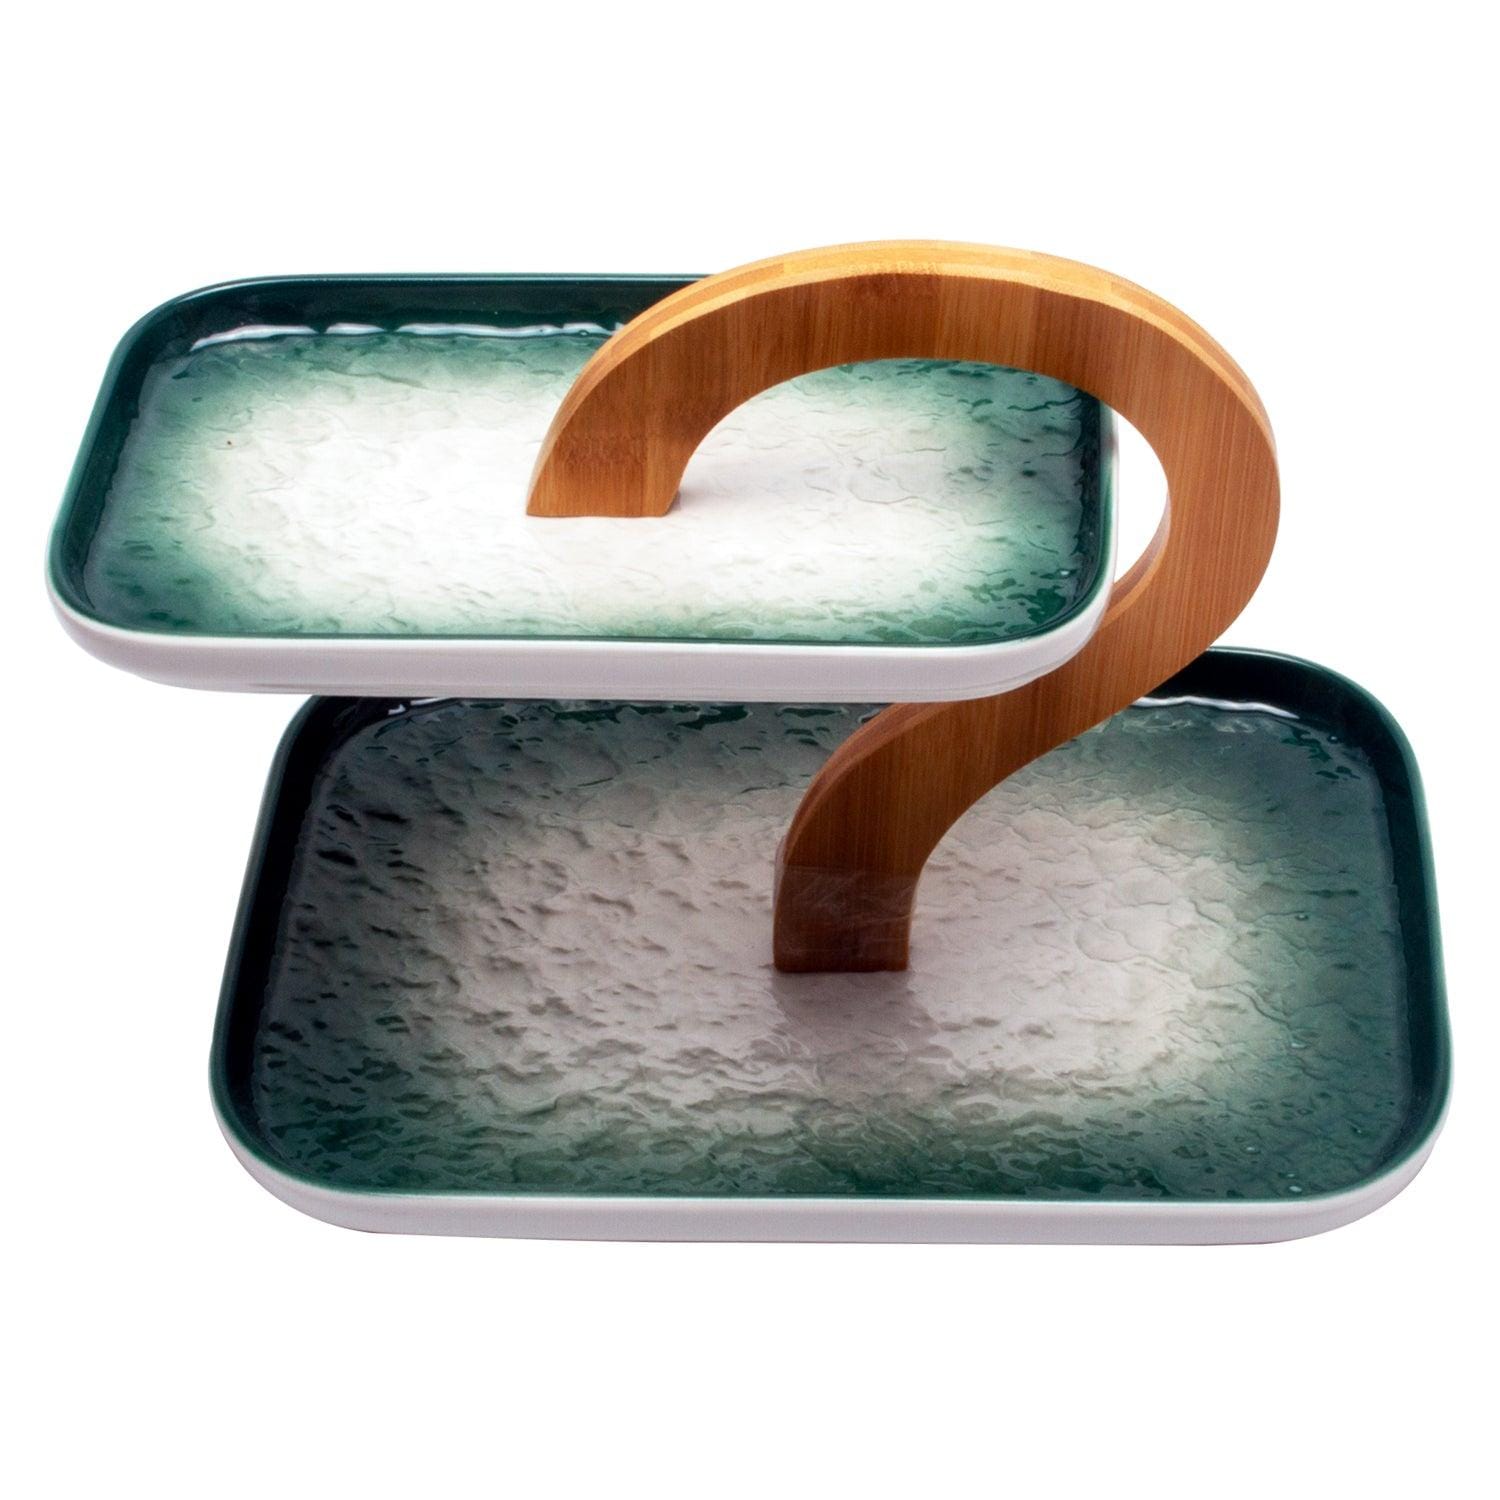 2 Tier Green & White Ceramic Elegant Q Serving Platter with Wooden Handle